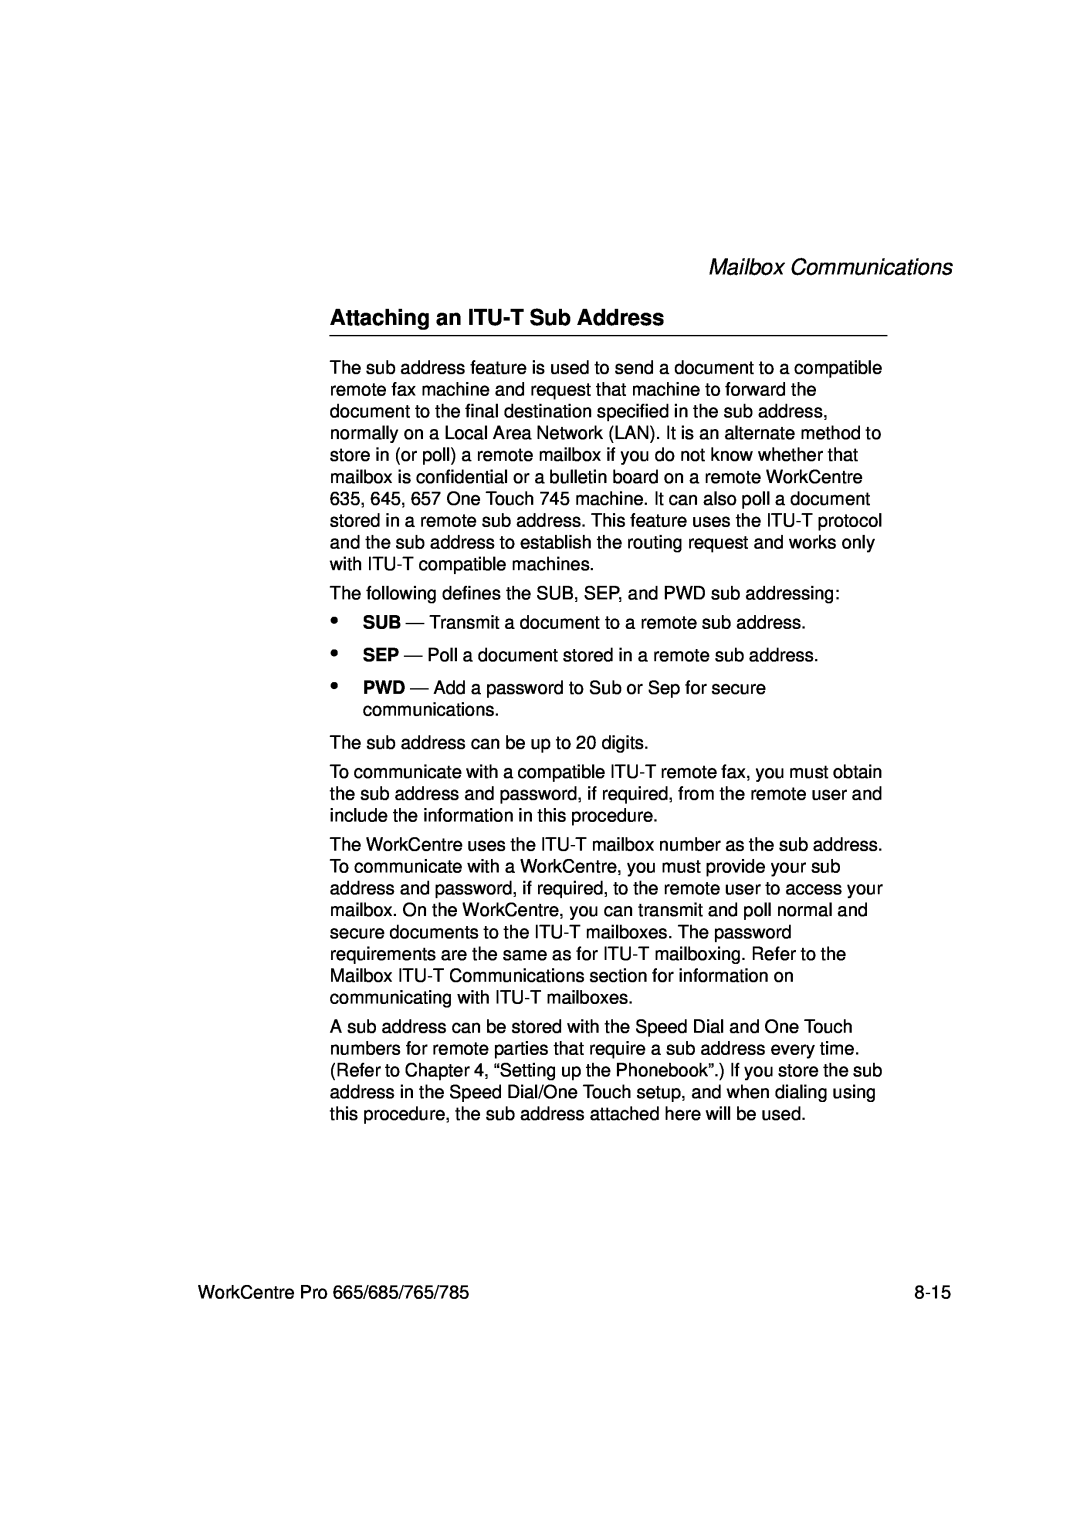 Xerox 785, 765, 665, 685 manual Attaching an ITU-TSub Address, • • •, Mailbox Communications 